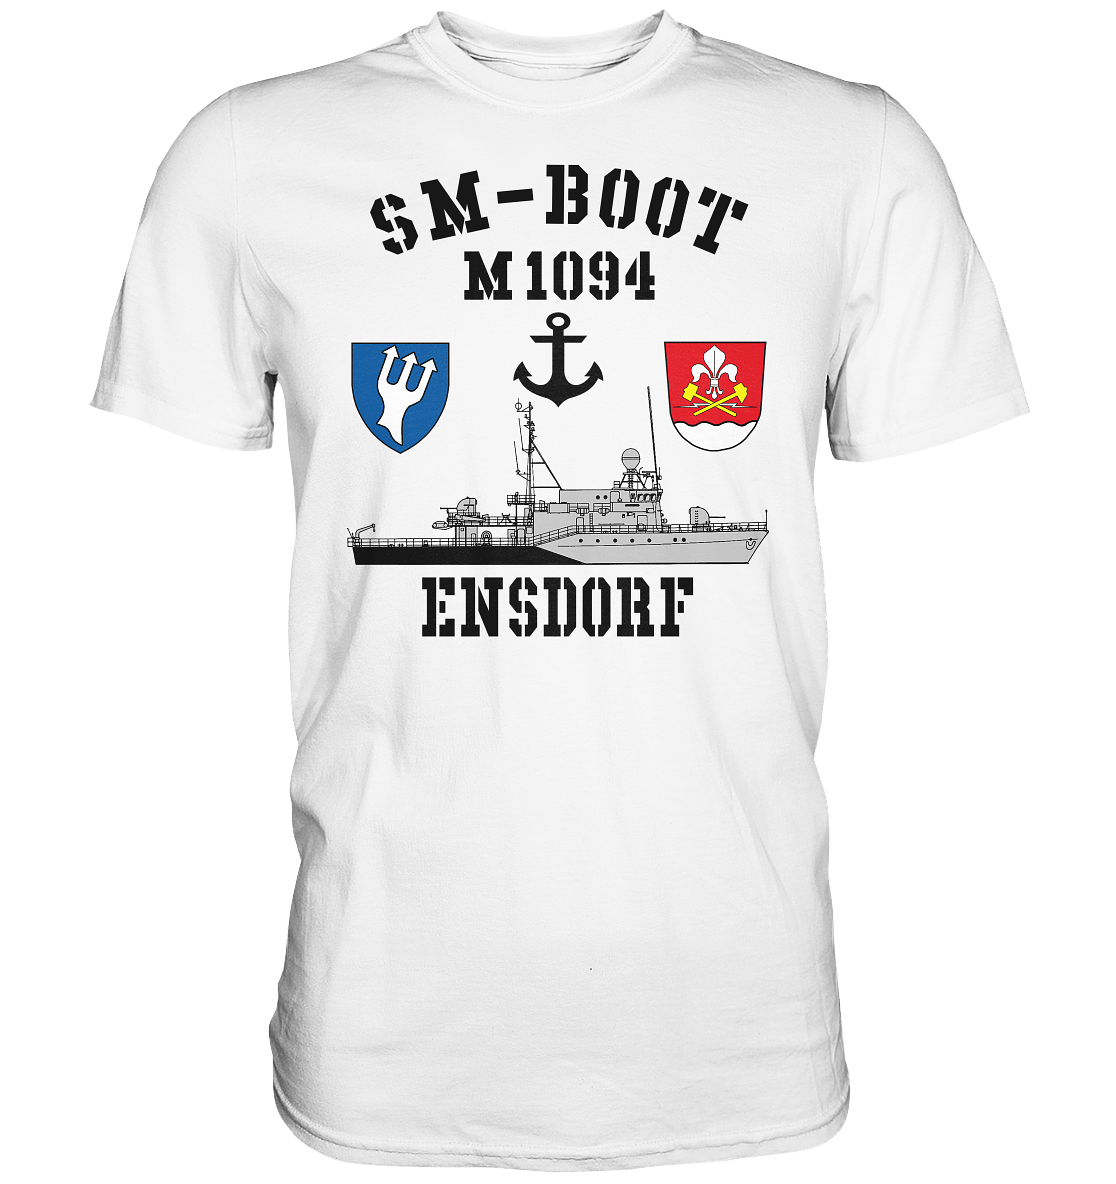 SM-Boot M1094 ENSDORF Anker - Premium Shirt